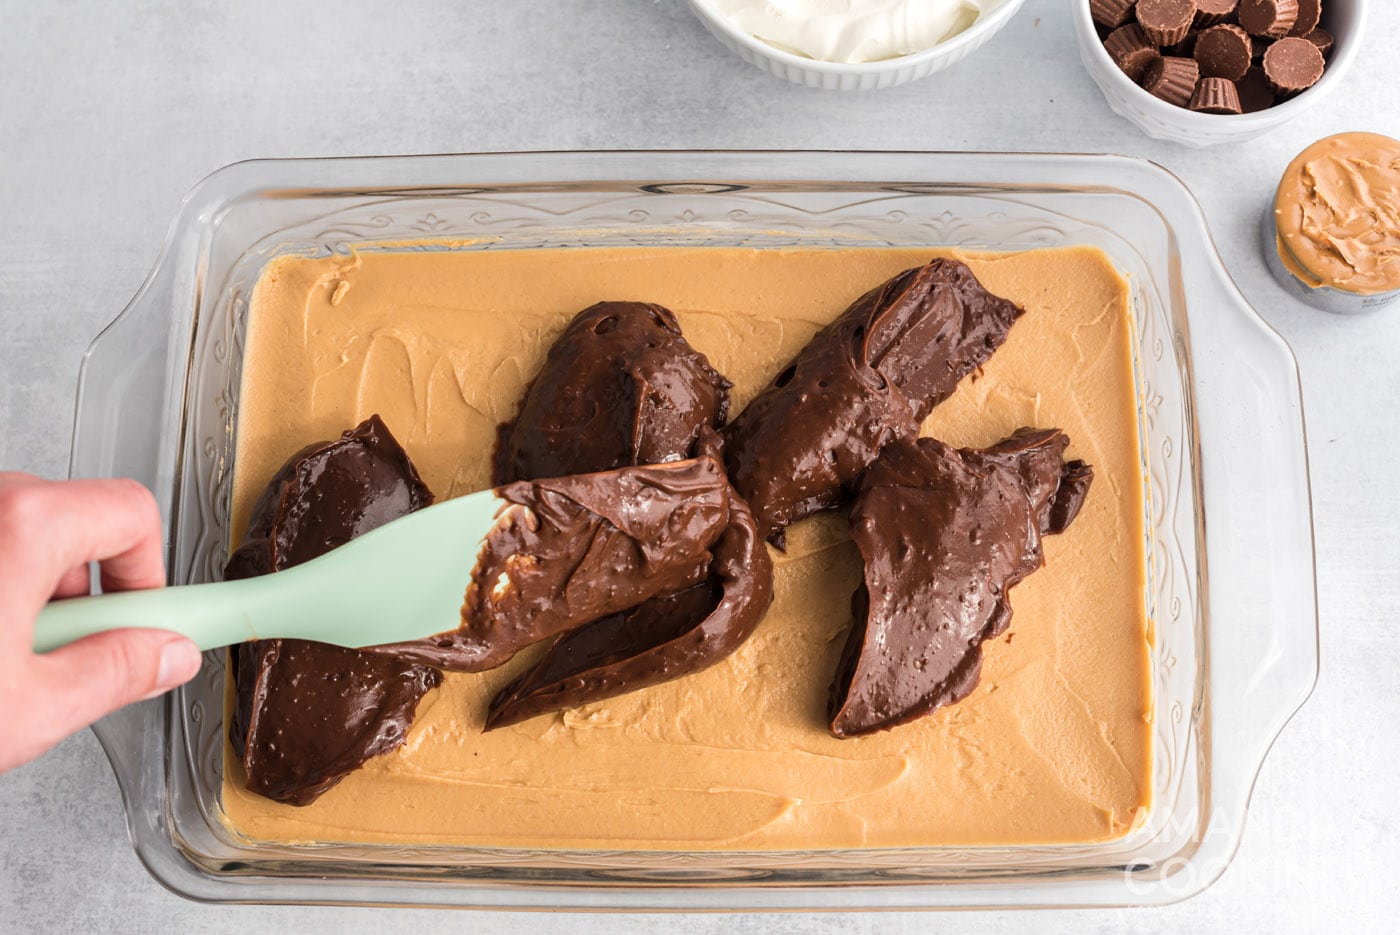 rubber spatula spreading chocolate pudding over peanut butter